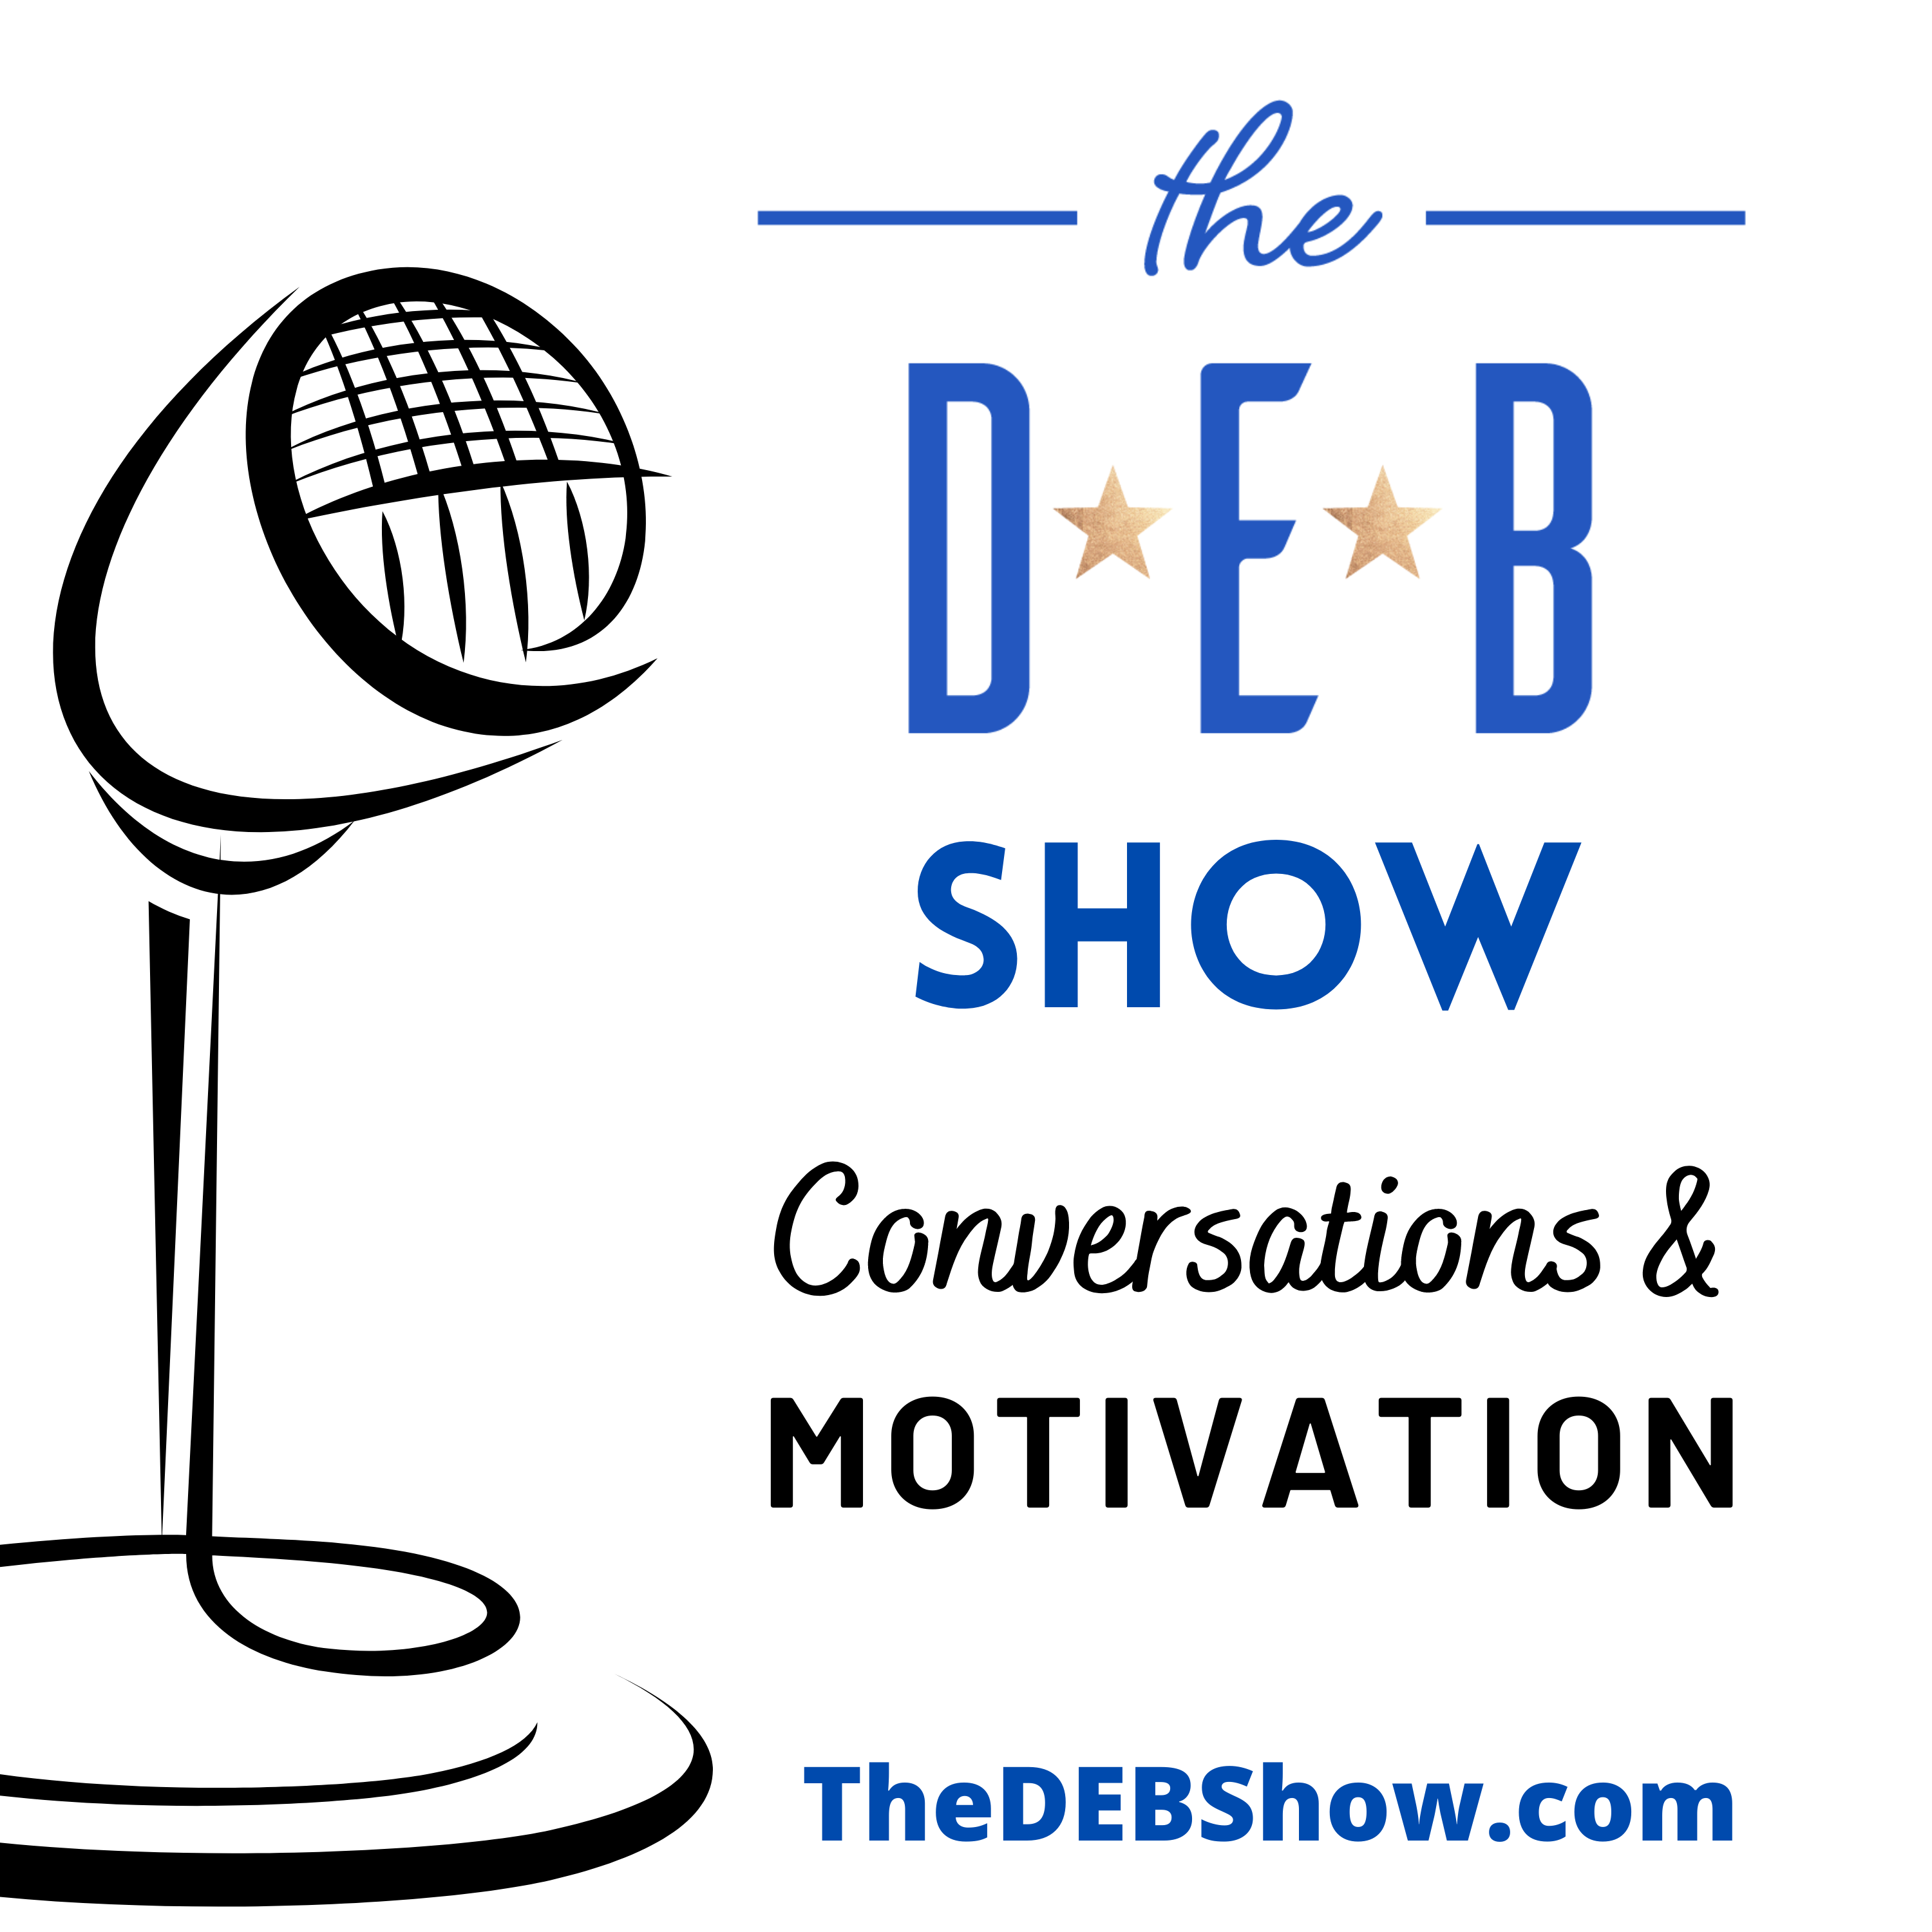 The Deb Show